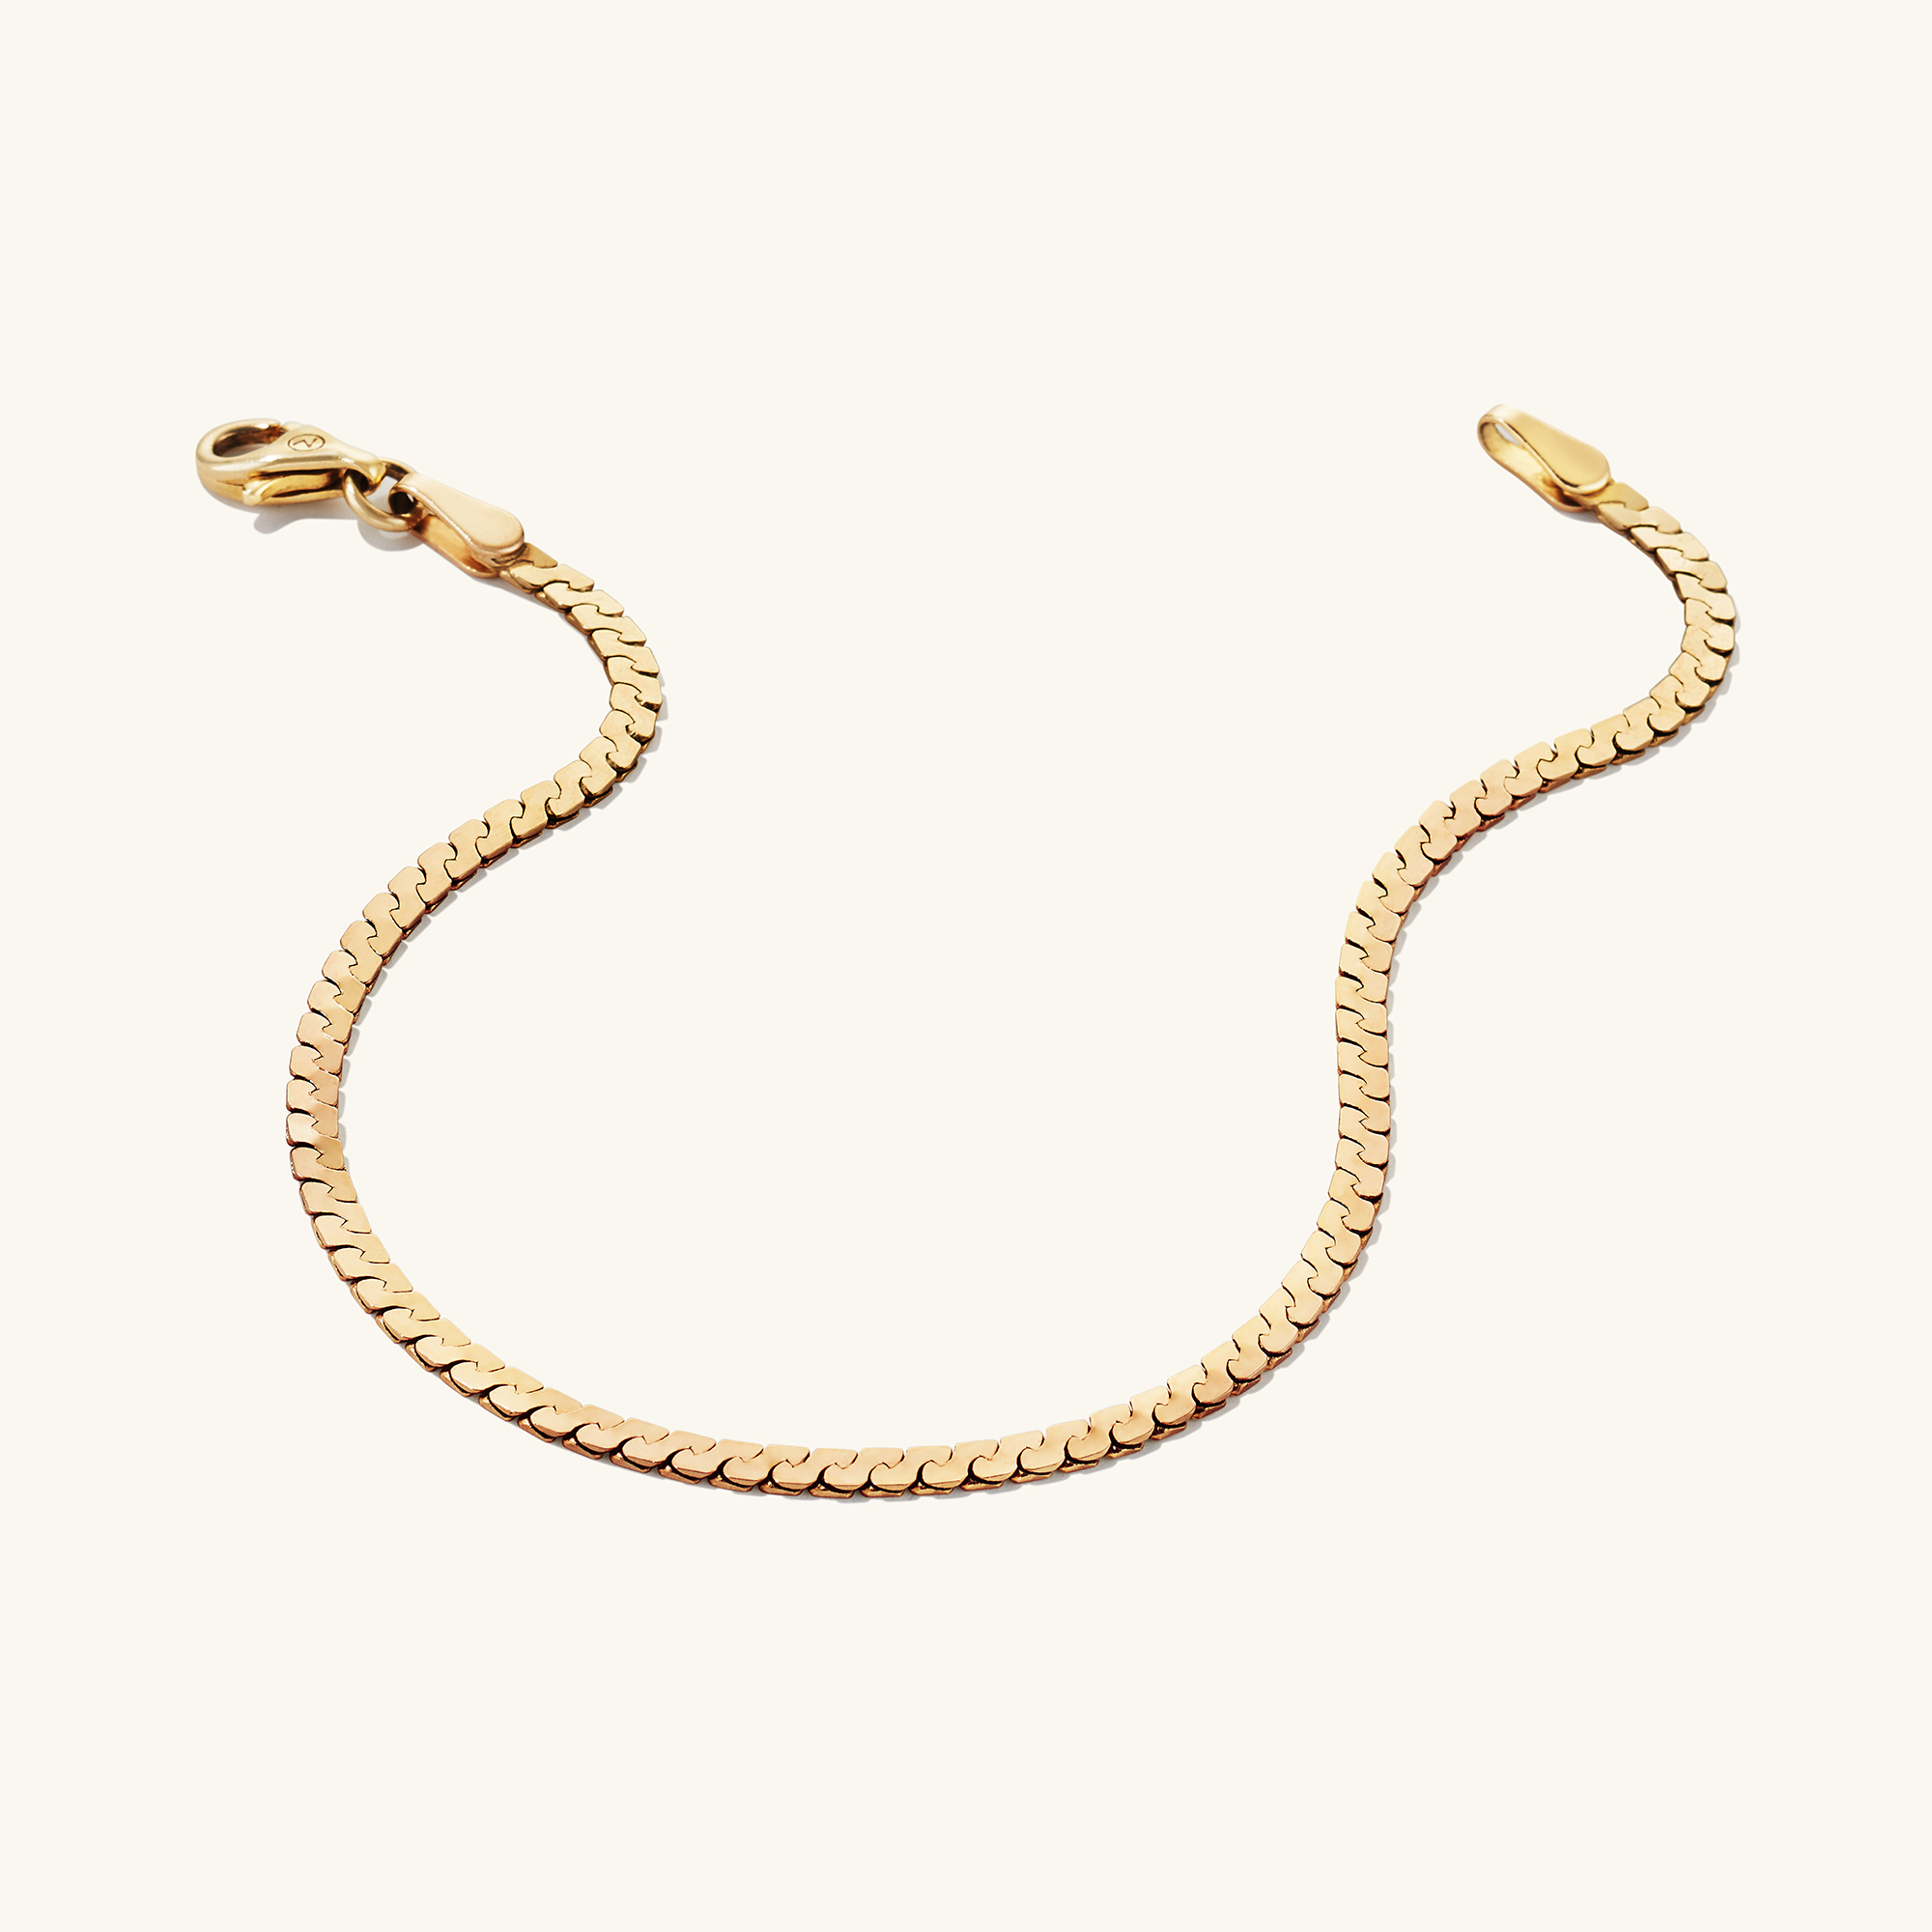  ZABARE Bracelet Chains for Jewelry Making, 15 PCS